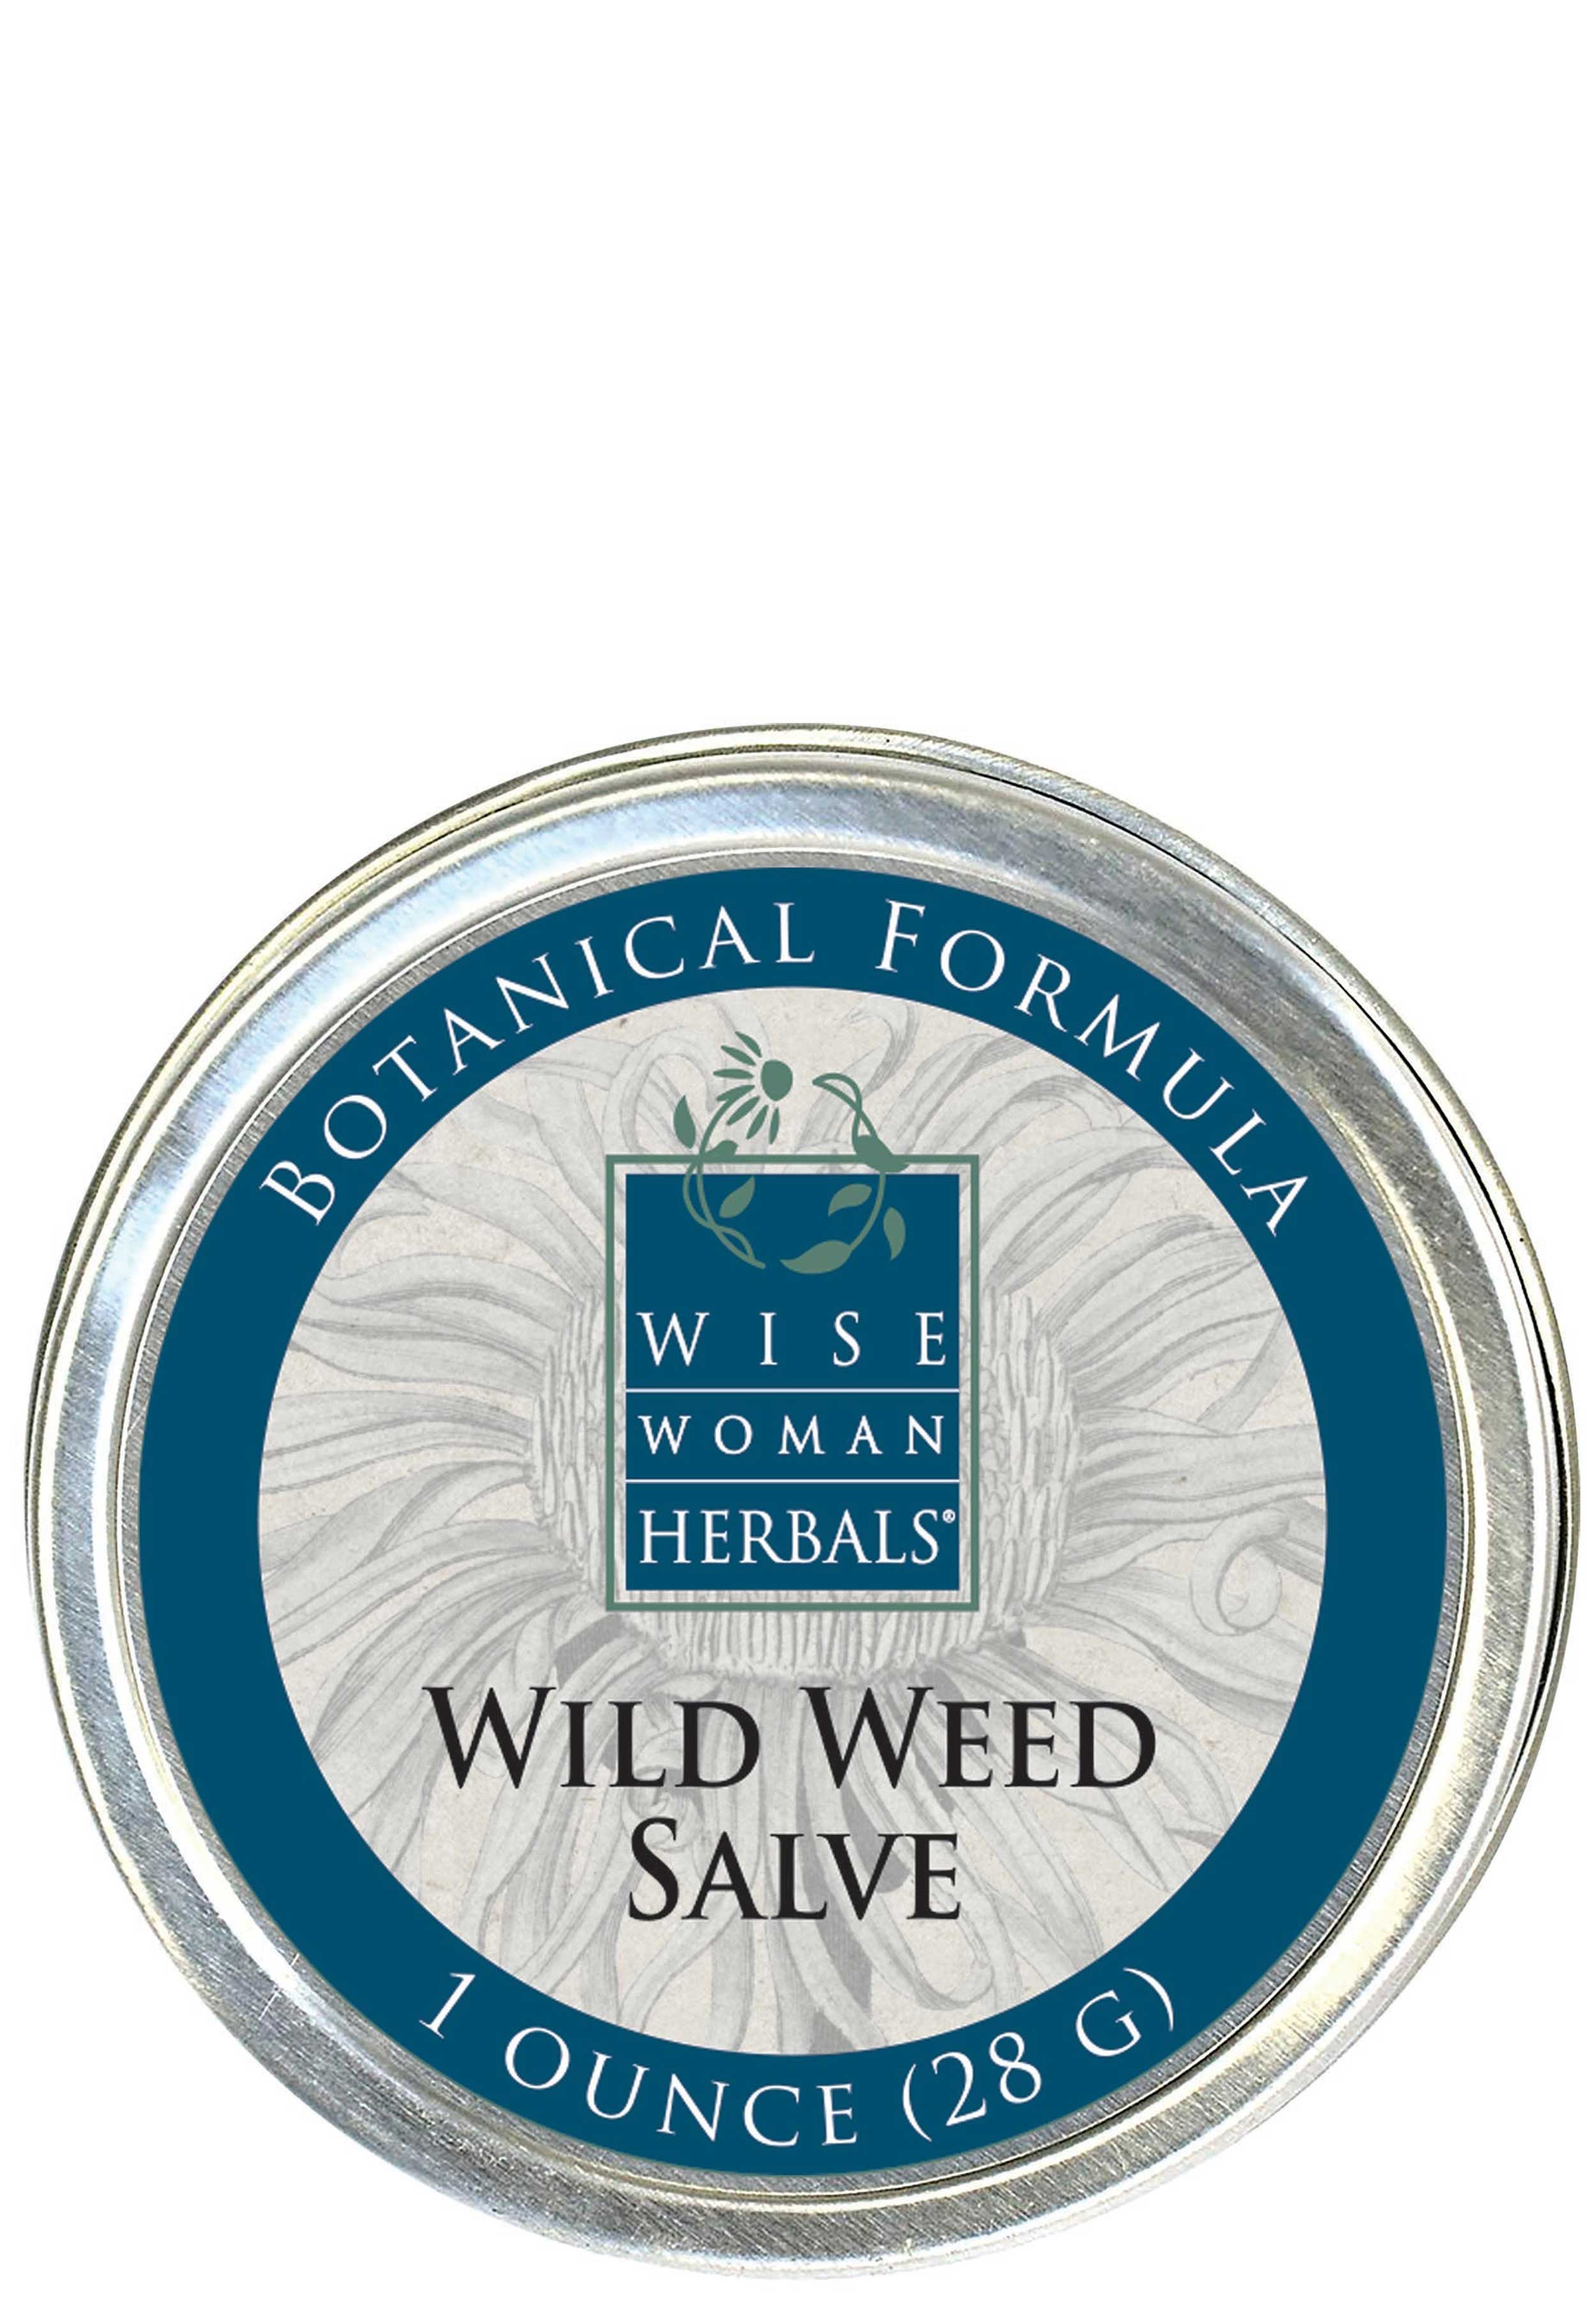 Wise Woman Herbals Wild Weed Salve